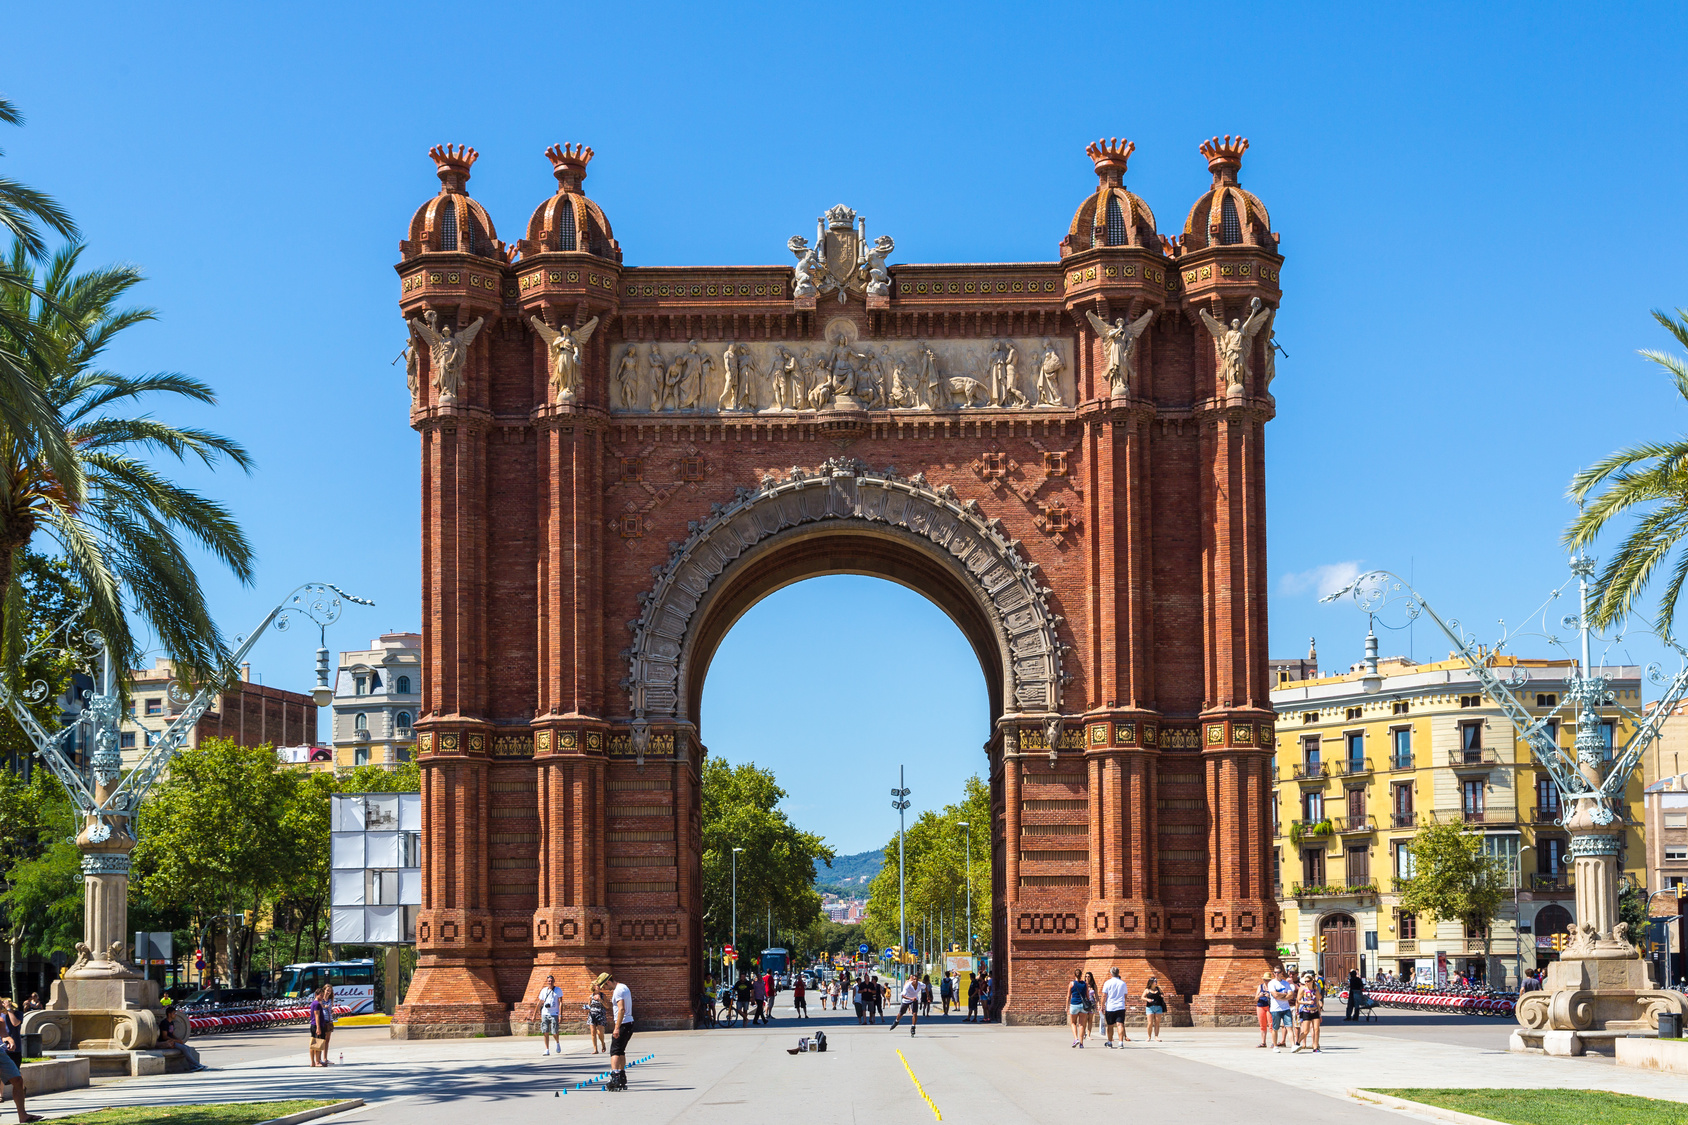 BARCELONA, SPAIN - JUNE 11: Triumph Arch of Barcelona in a summer day in Barcelona, Spain